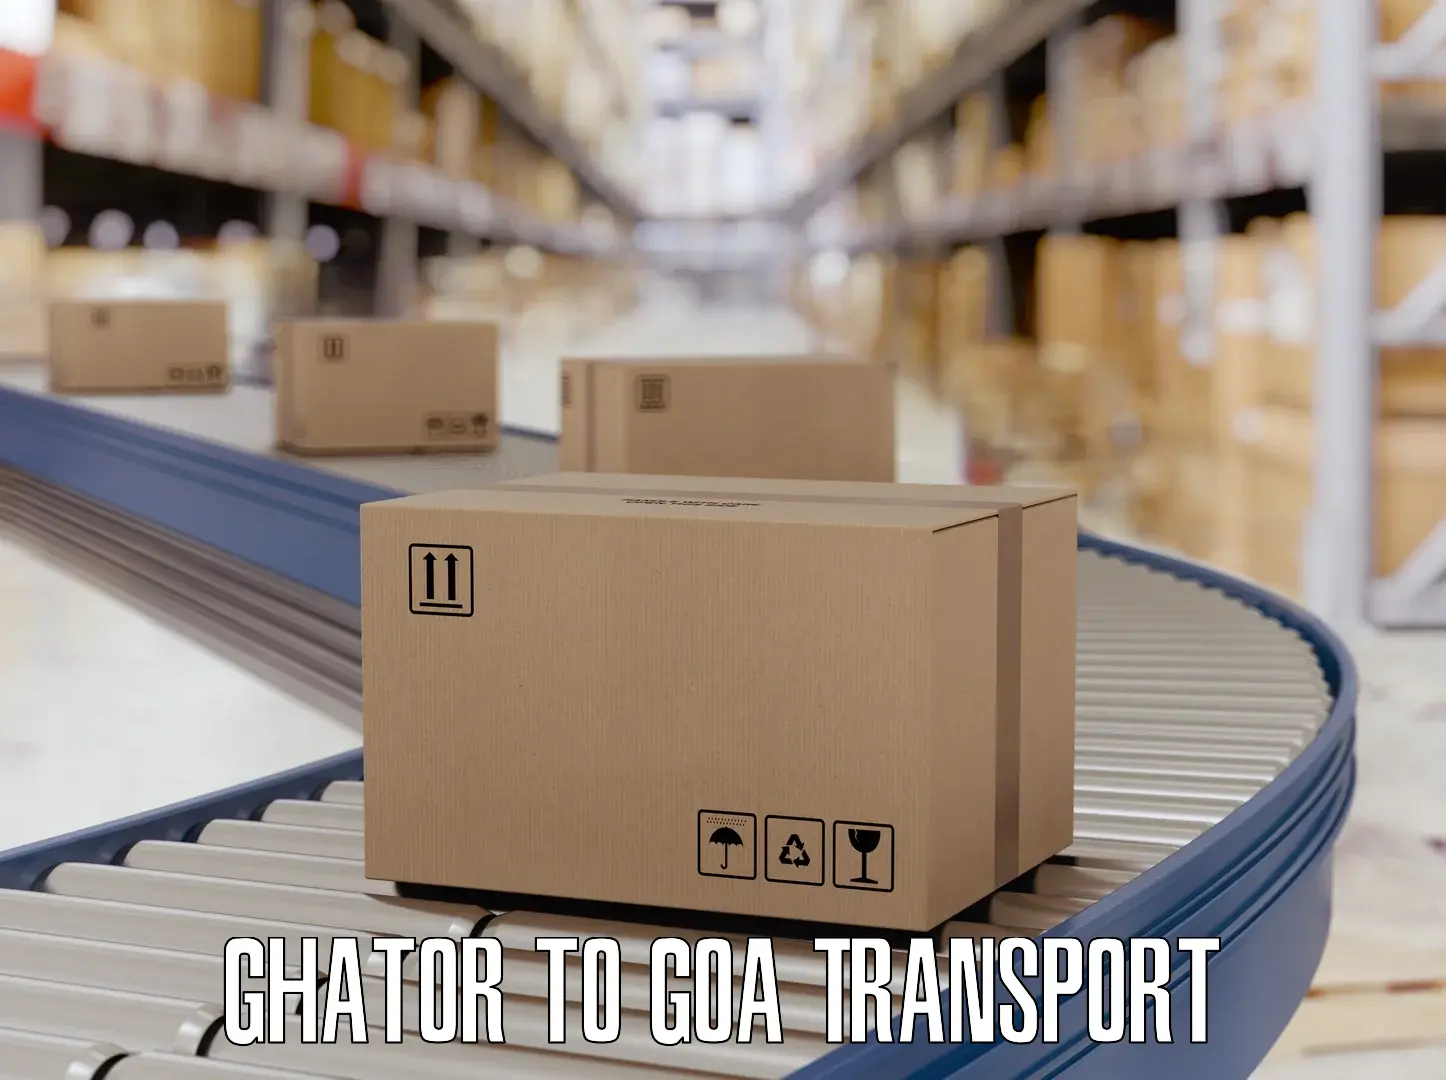 Shipping partner Ghator to Goa